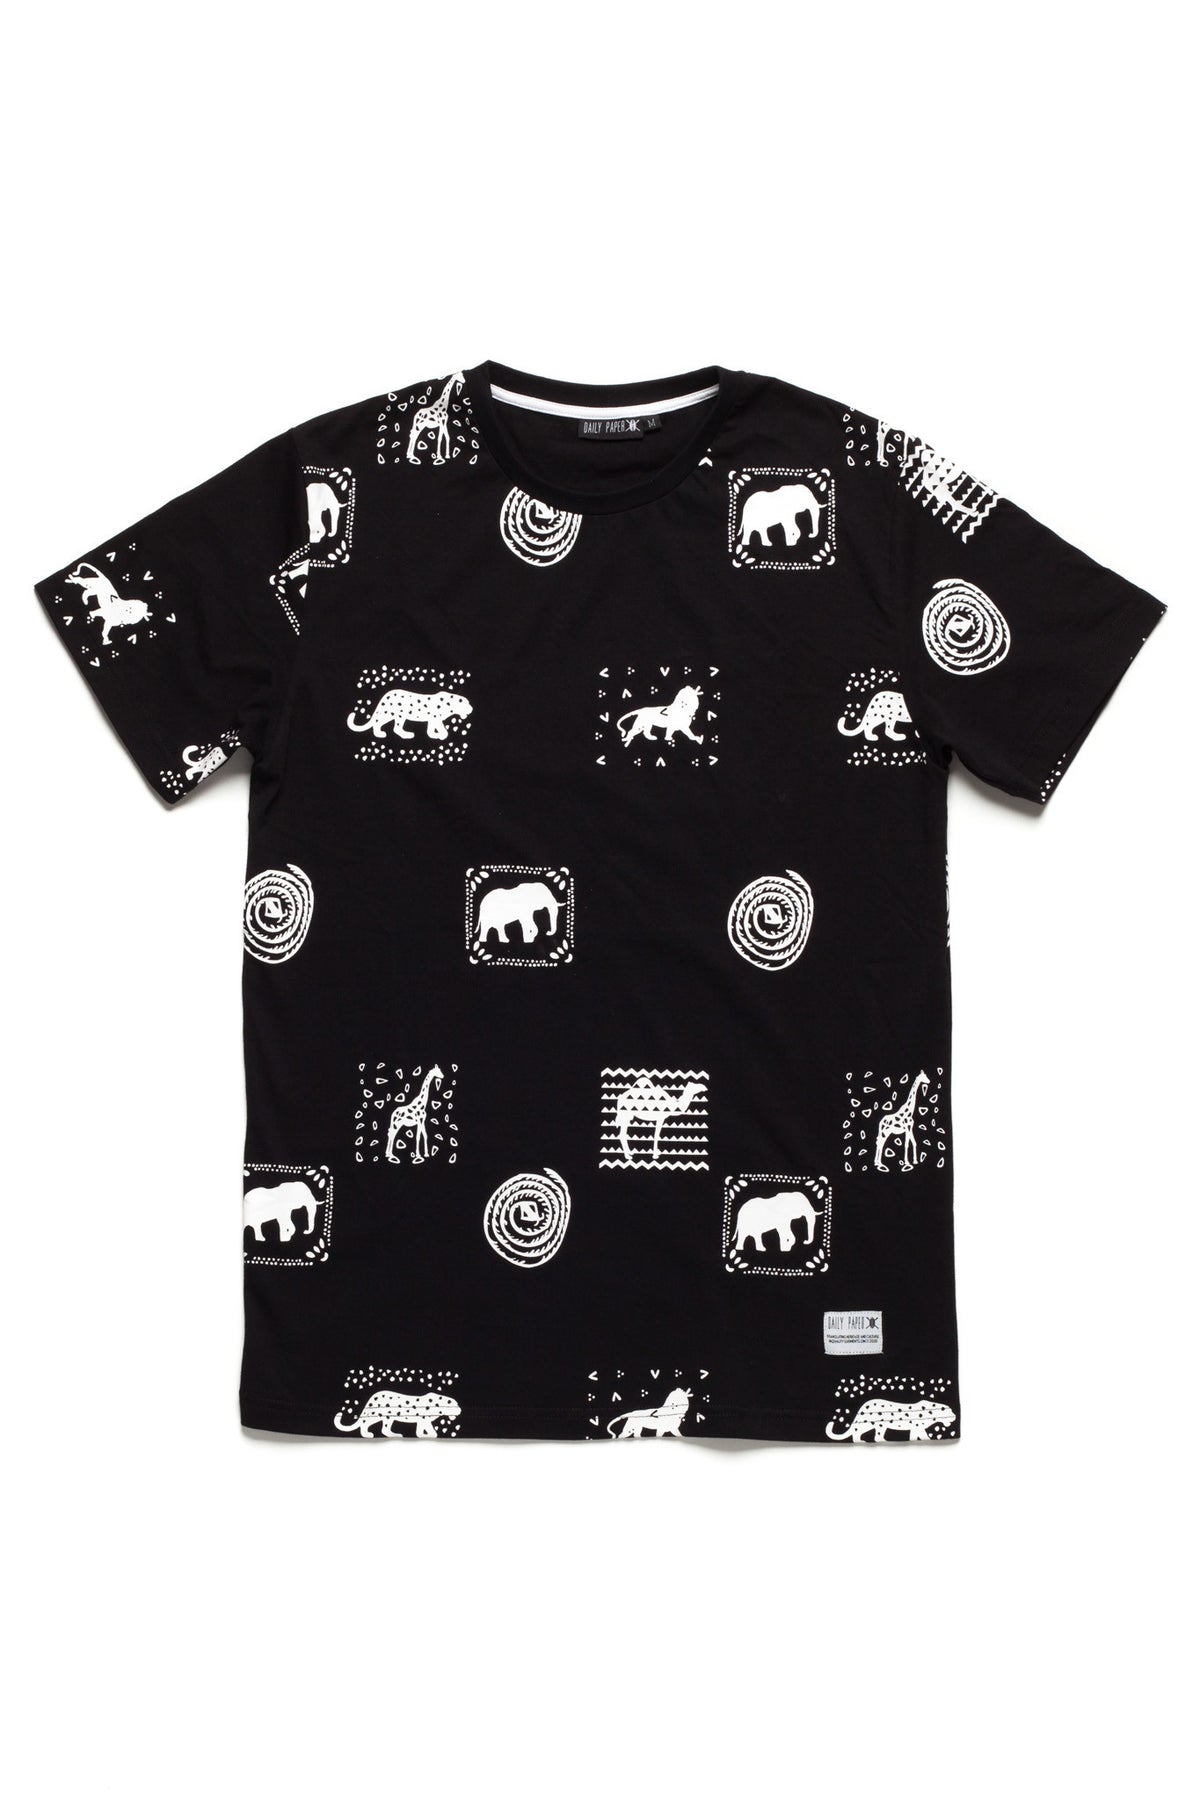 Daily Paper Black Animal Print T-Shirt